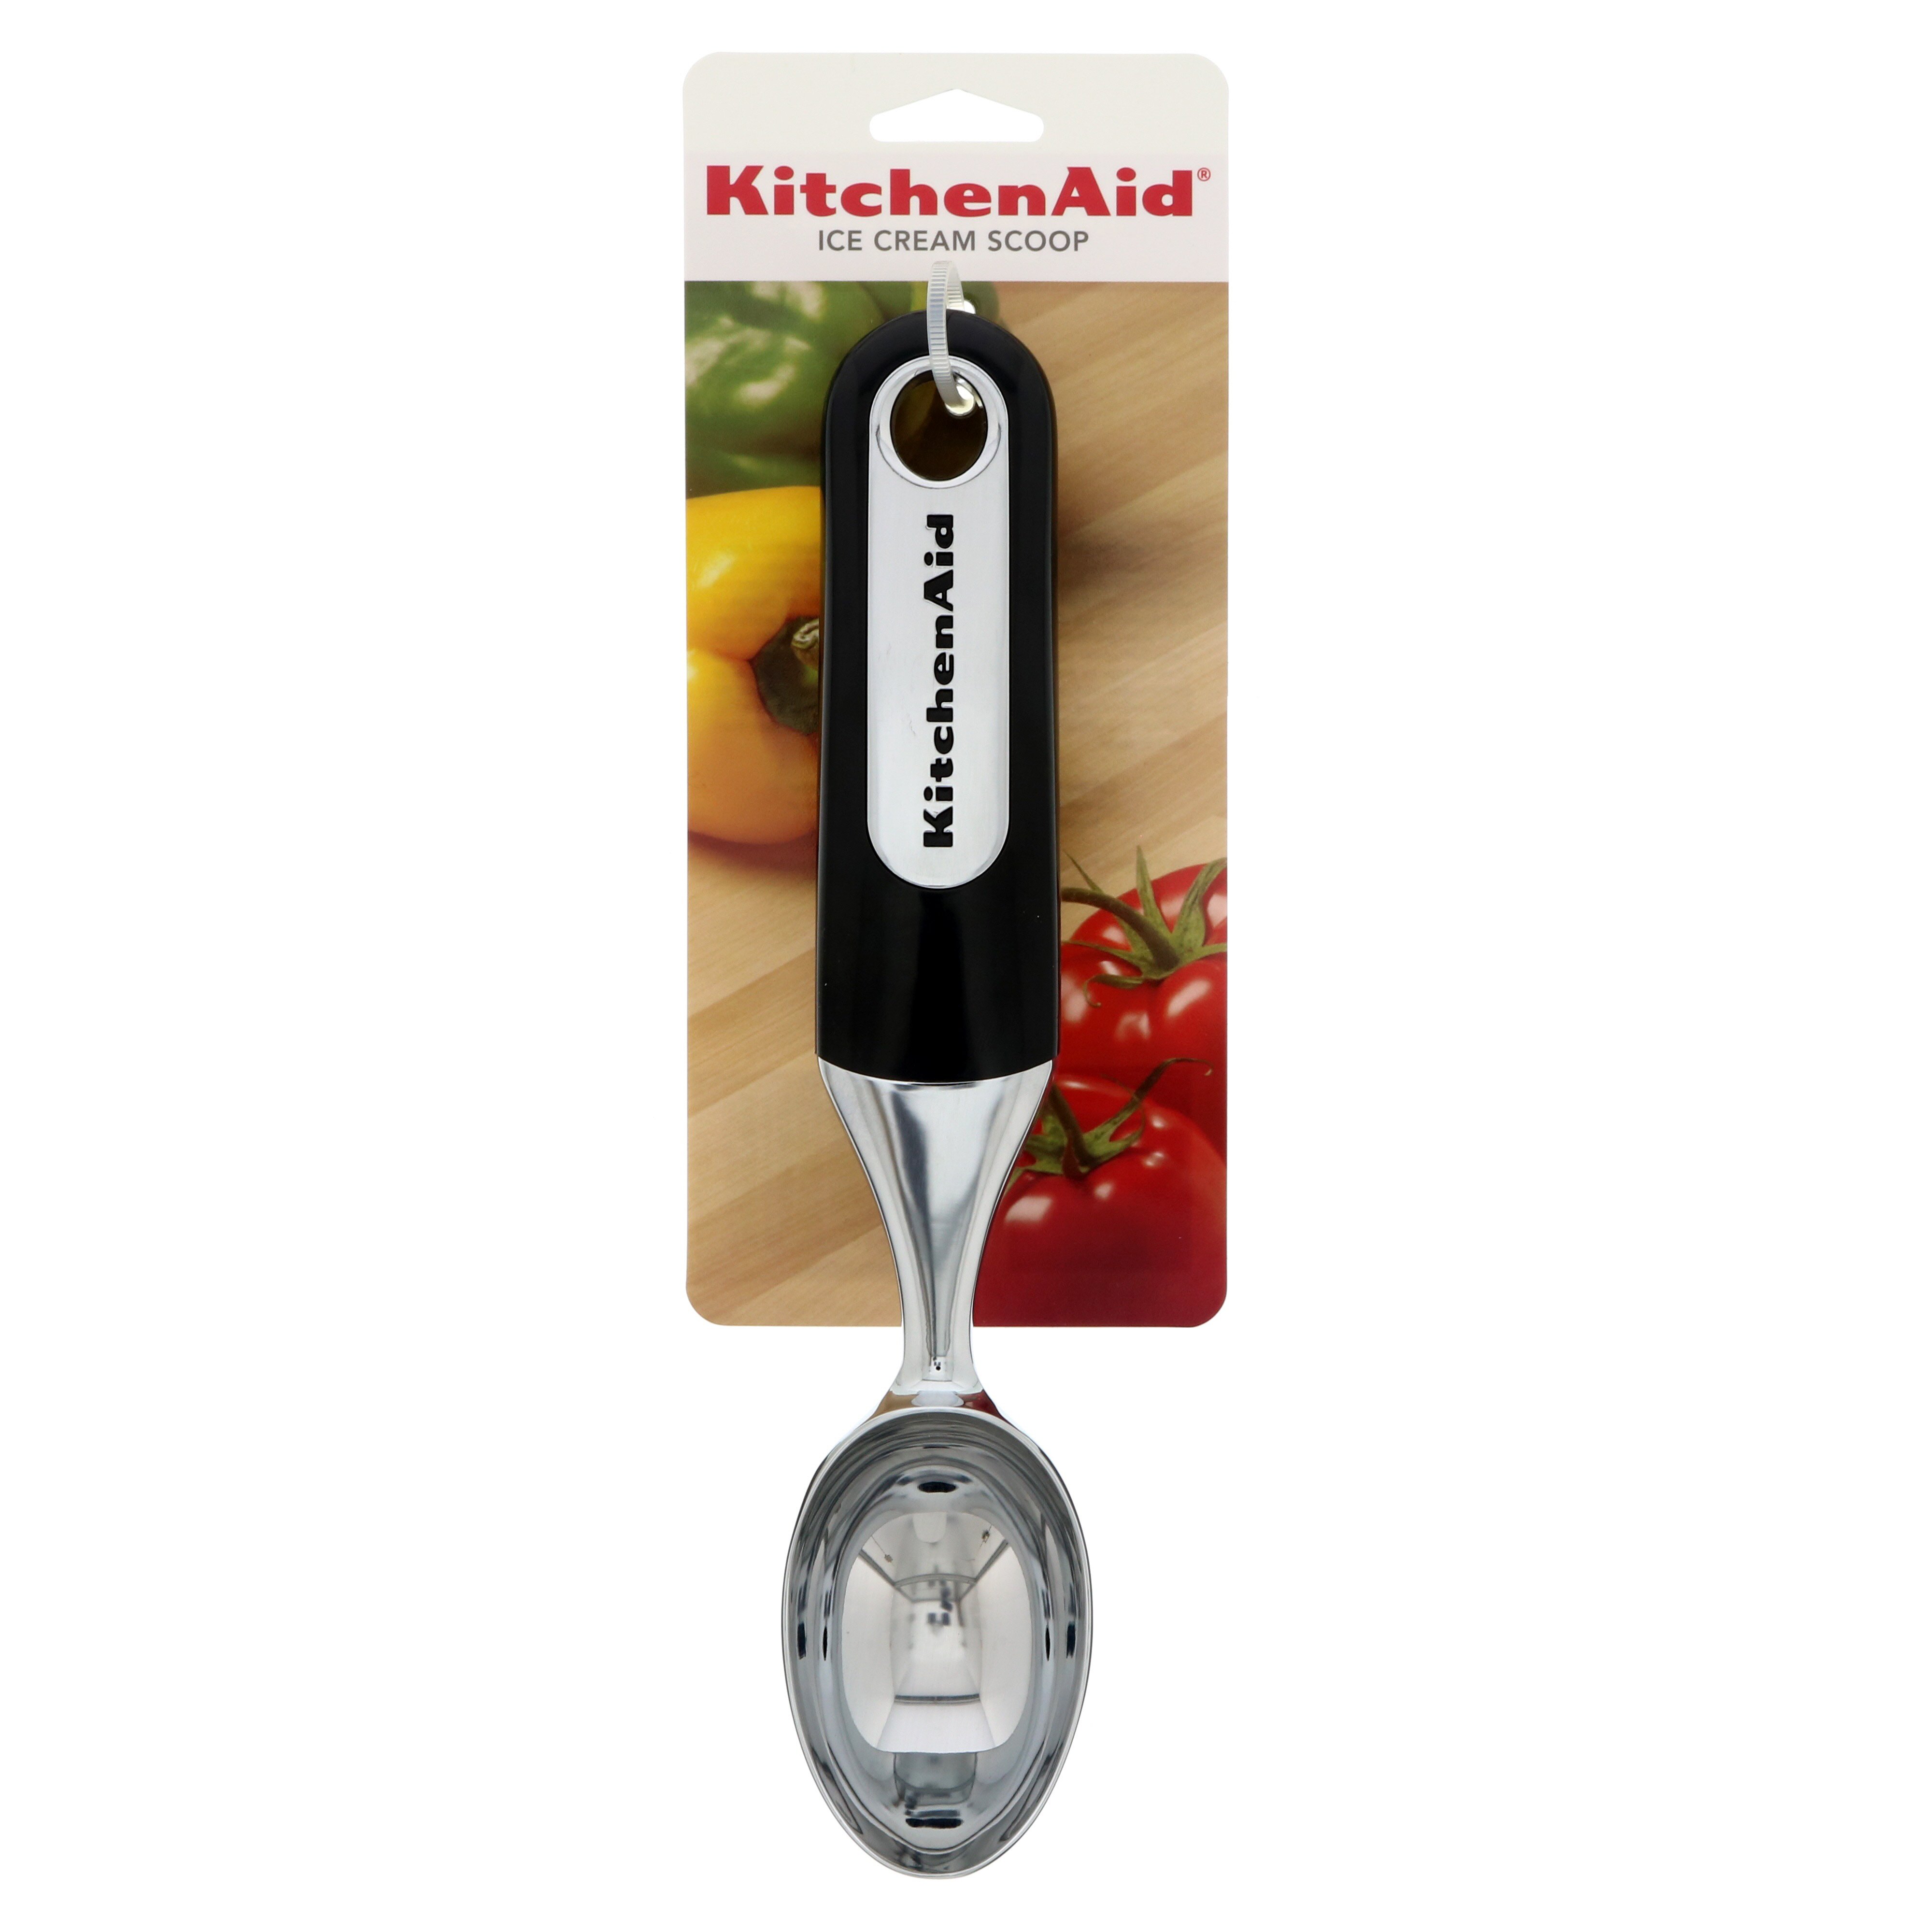 KitchenAid Gadgets KitchenAid Ice Cream Scoop